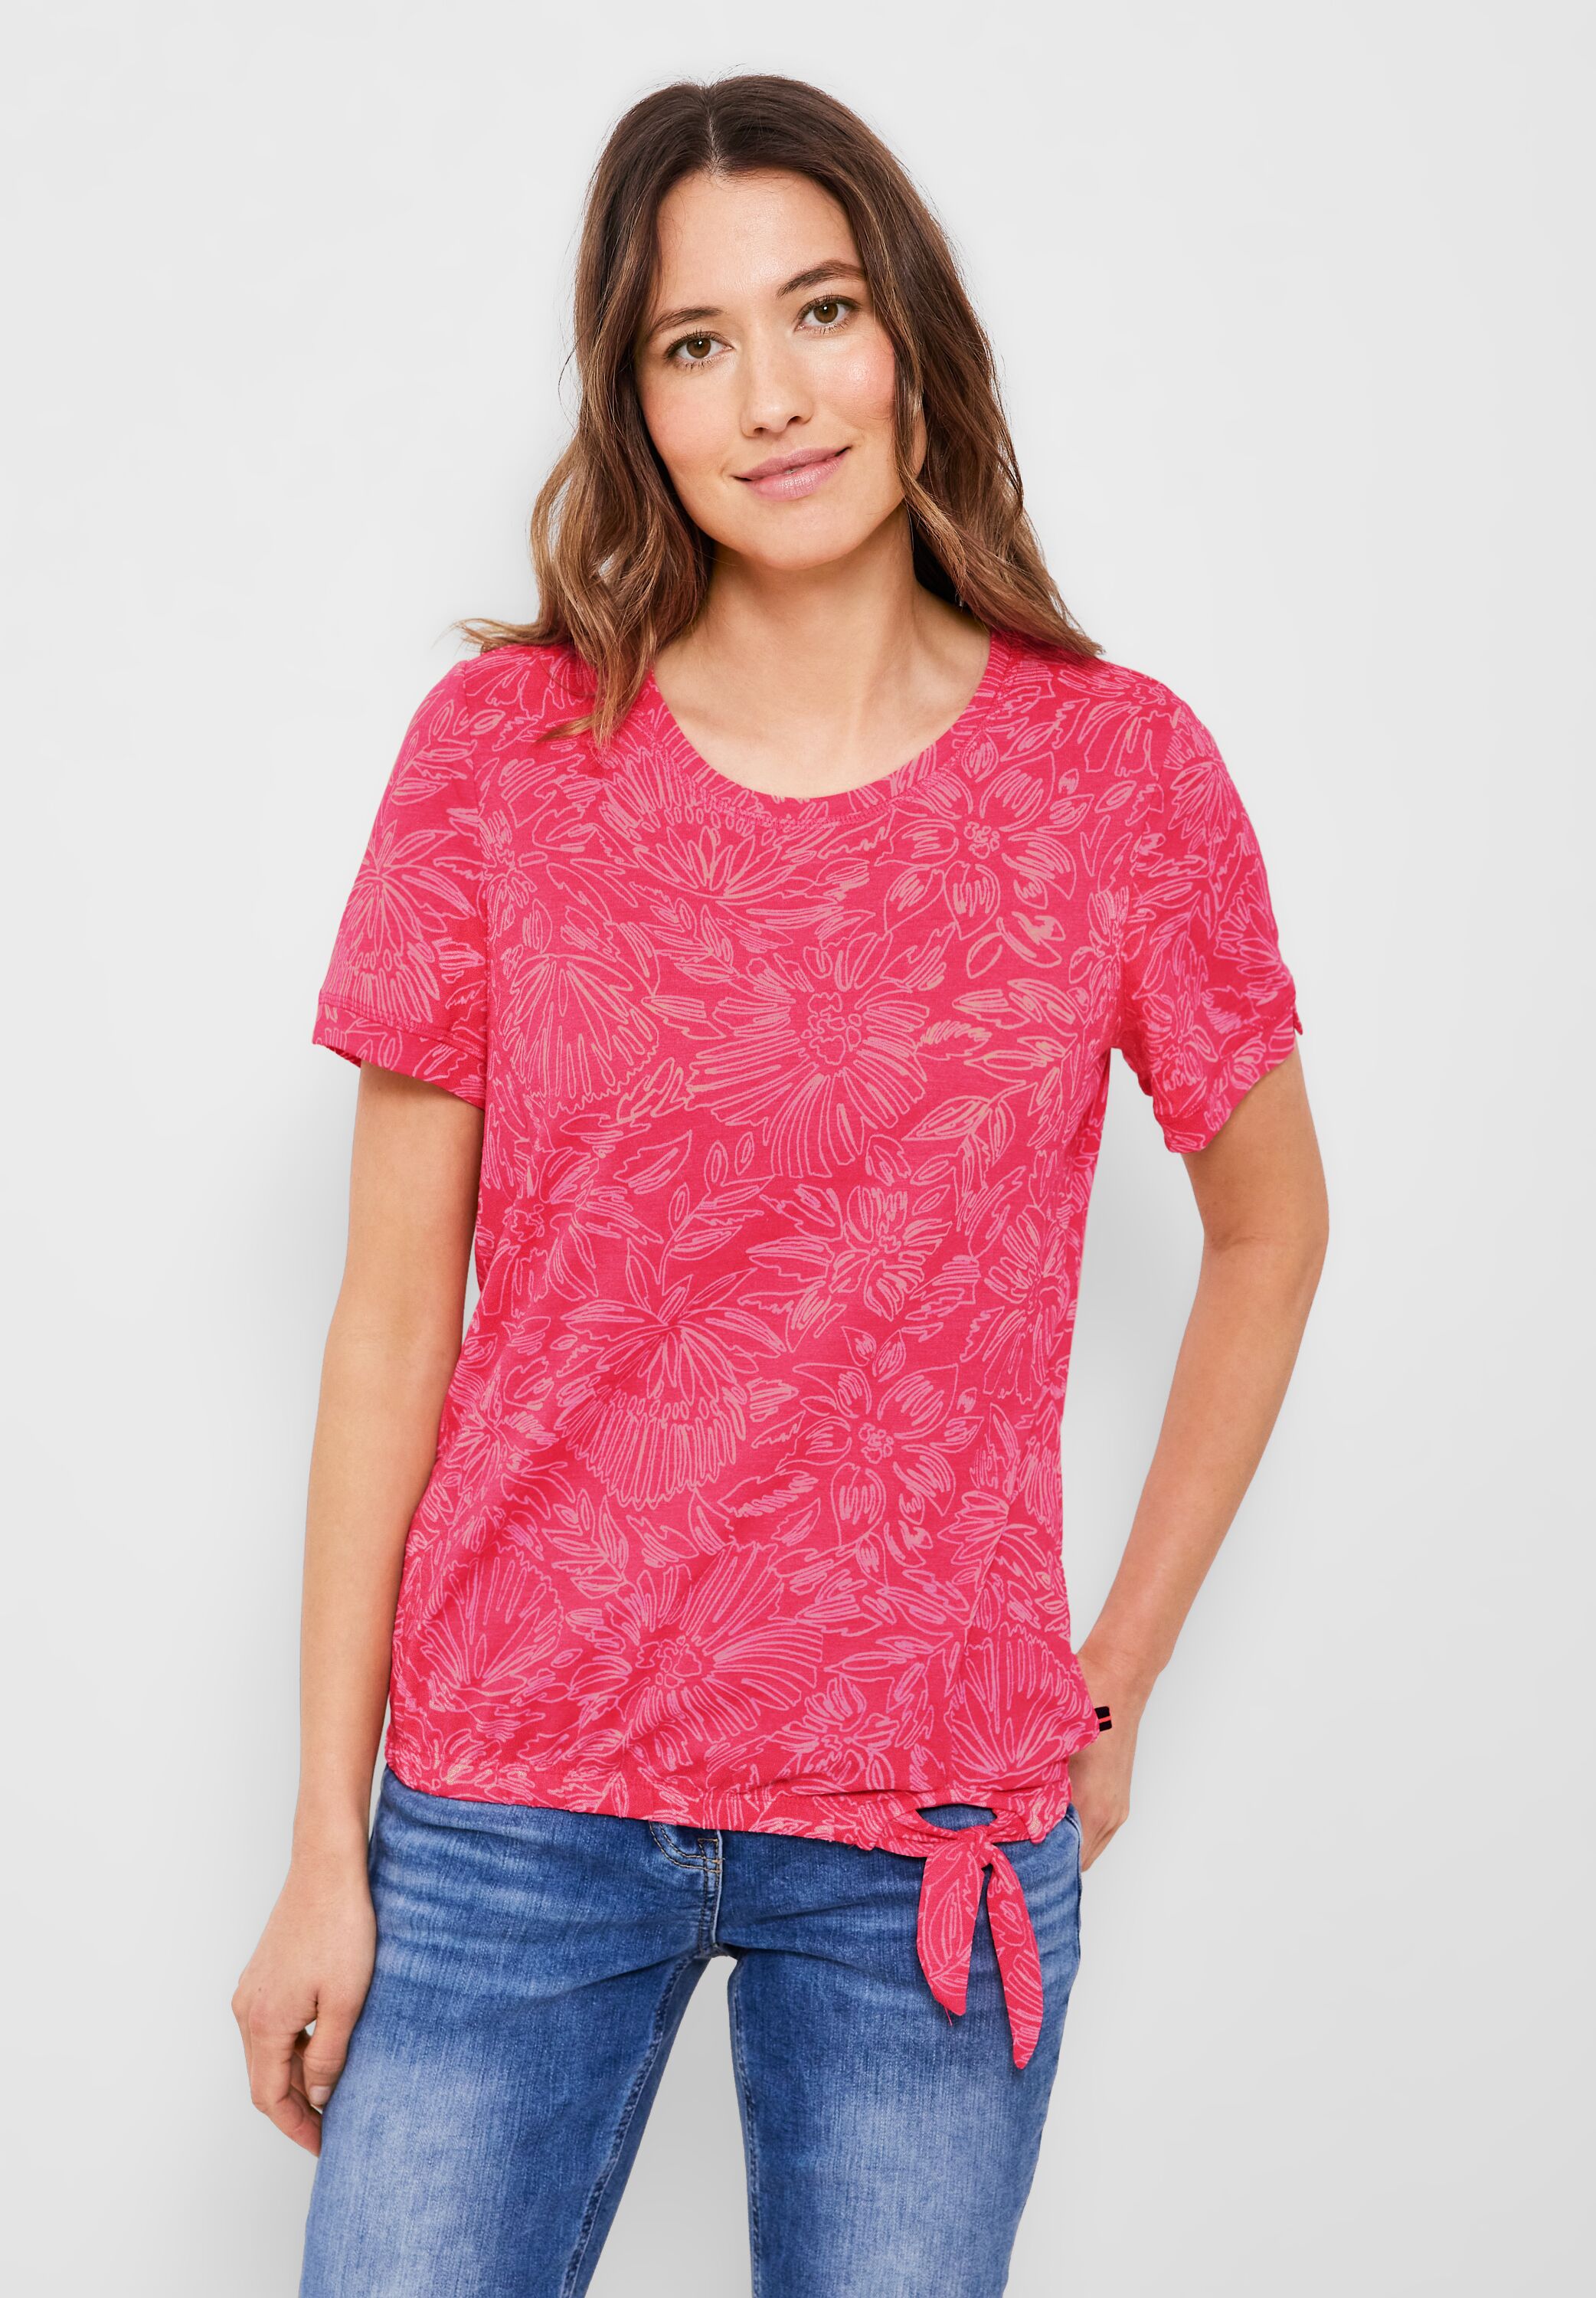 CECIL T-Shirt in Strawberry Red im SALE reduziert B319600-24472 - CONCEPT  Mode